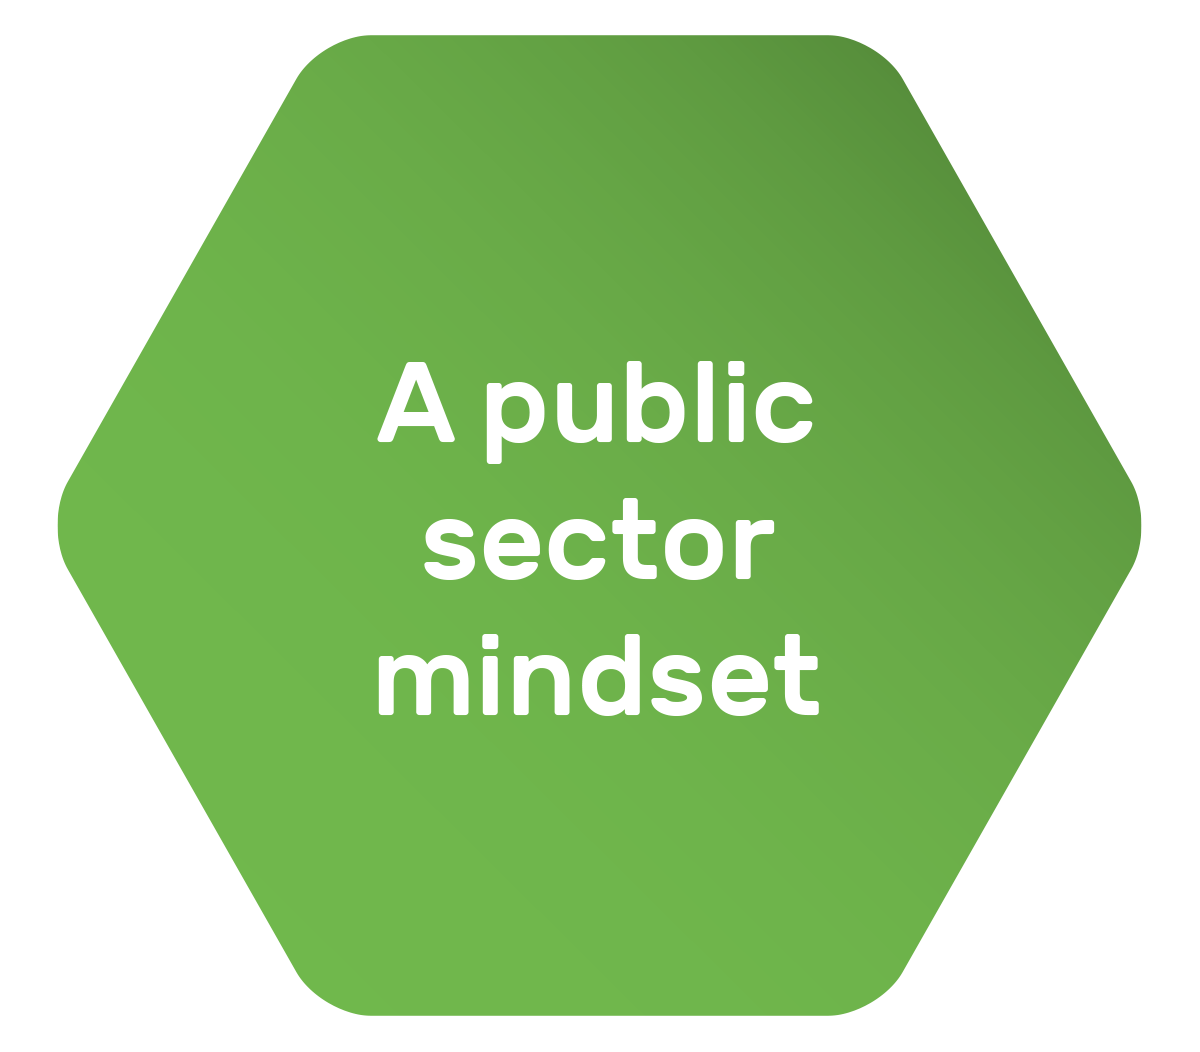 A public sector mindset